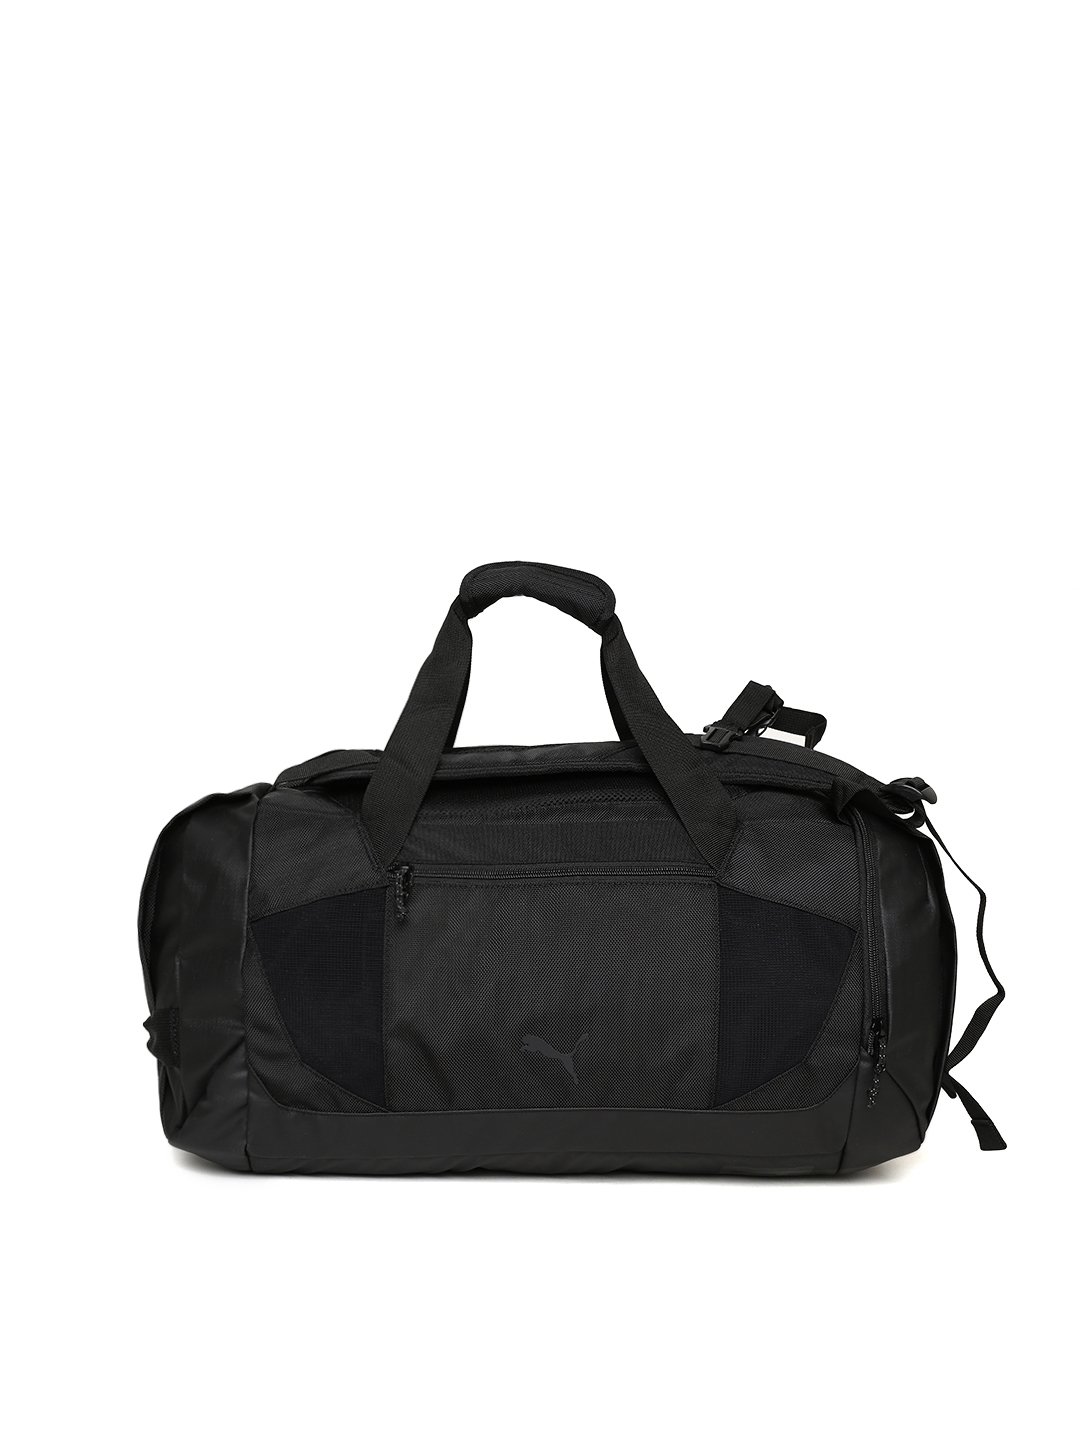 puma black solid duffle bag